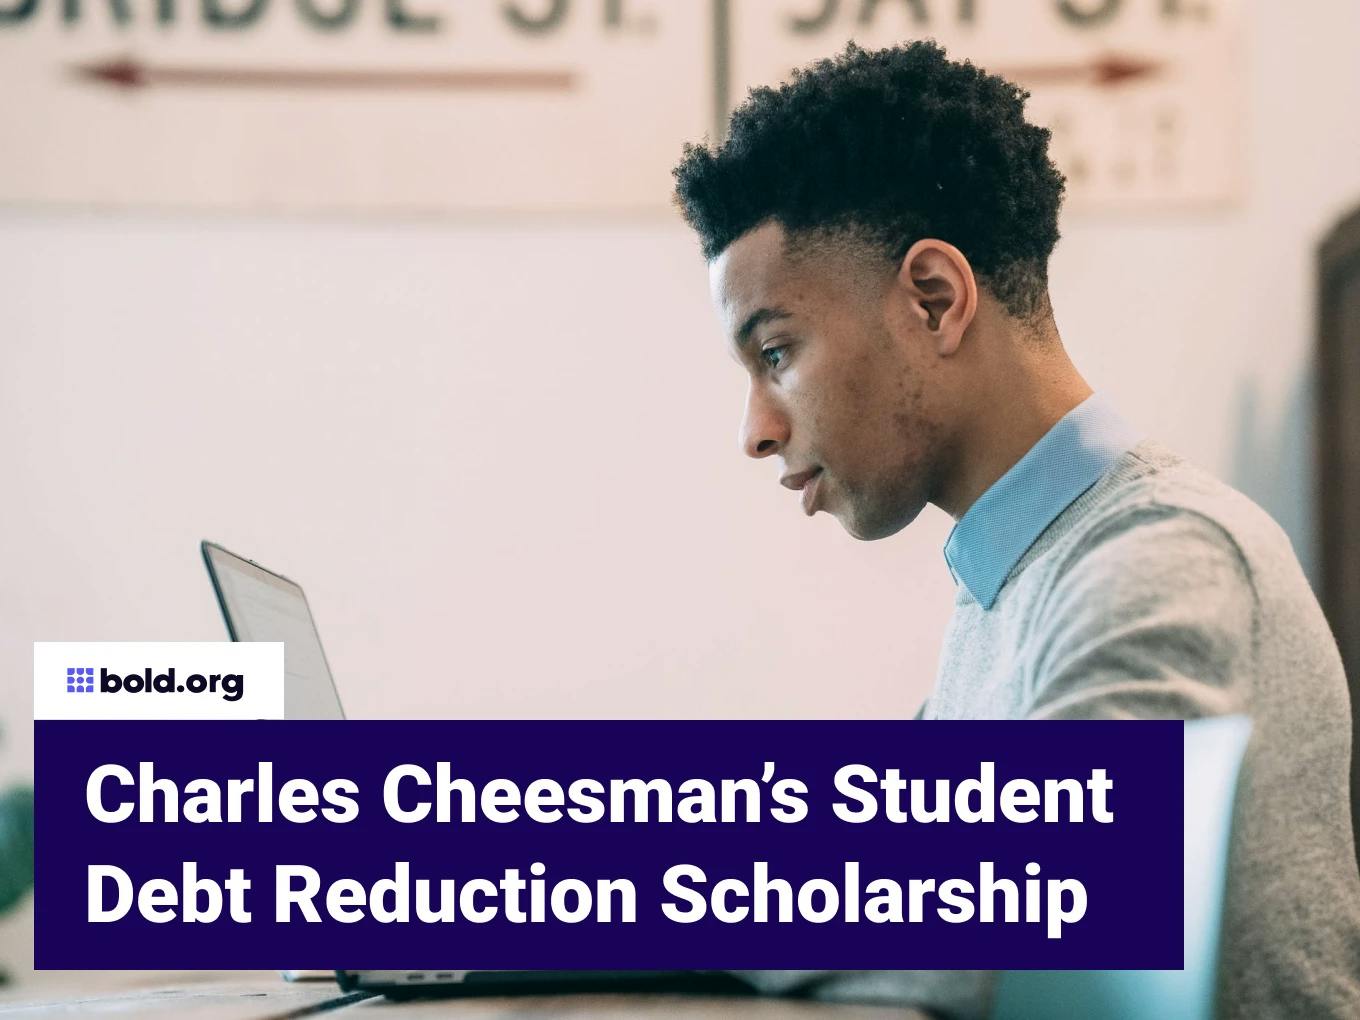 Charles Cheesman's Student Debt Reduction Scholarship